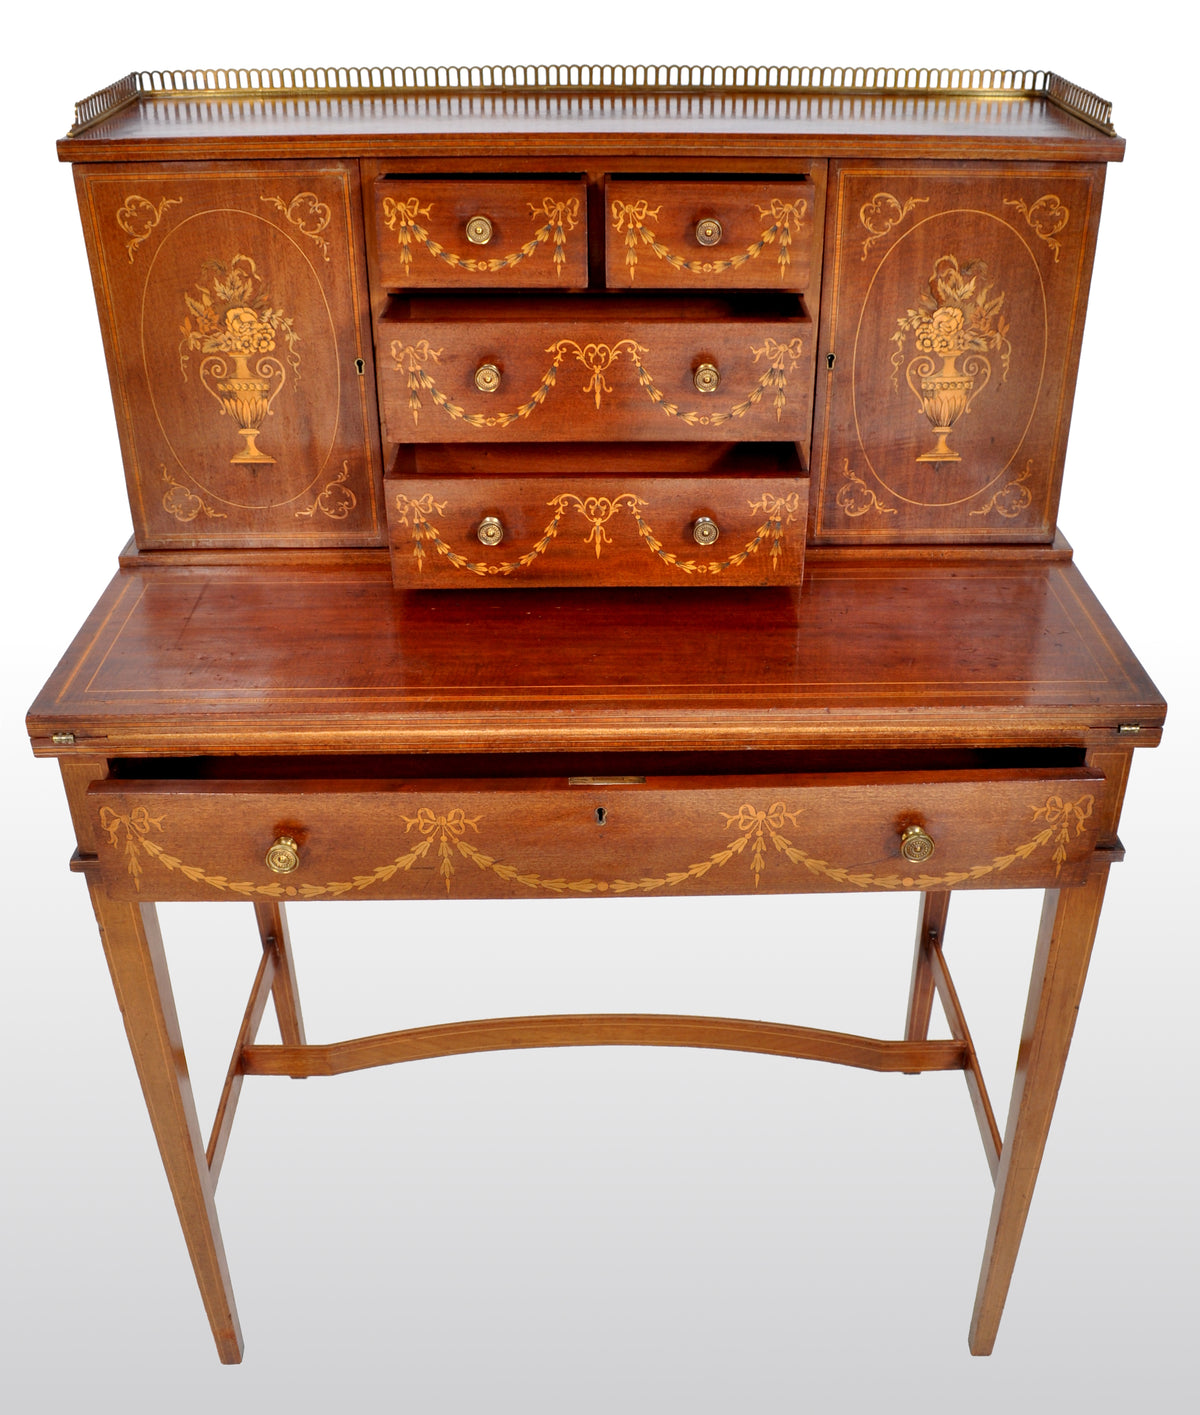 Antique Sheraton Revival Inlaid Mahogany Desk / Writing Table, circa 1895